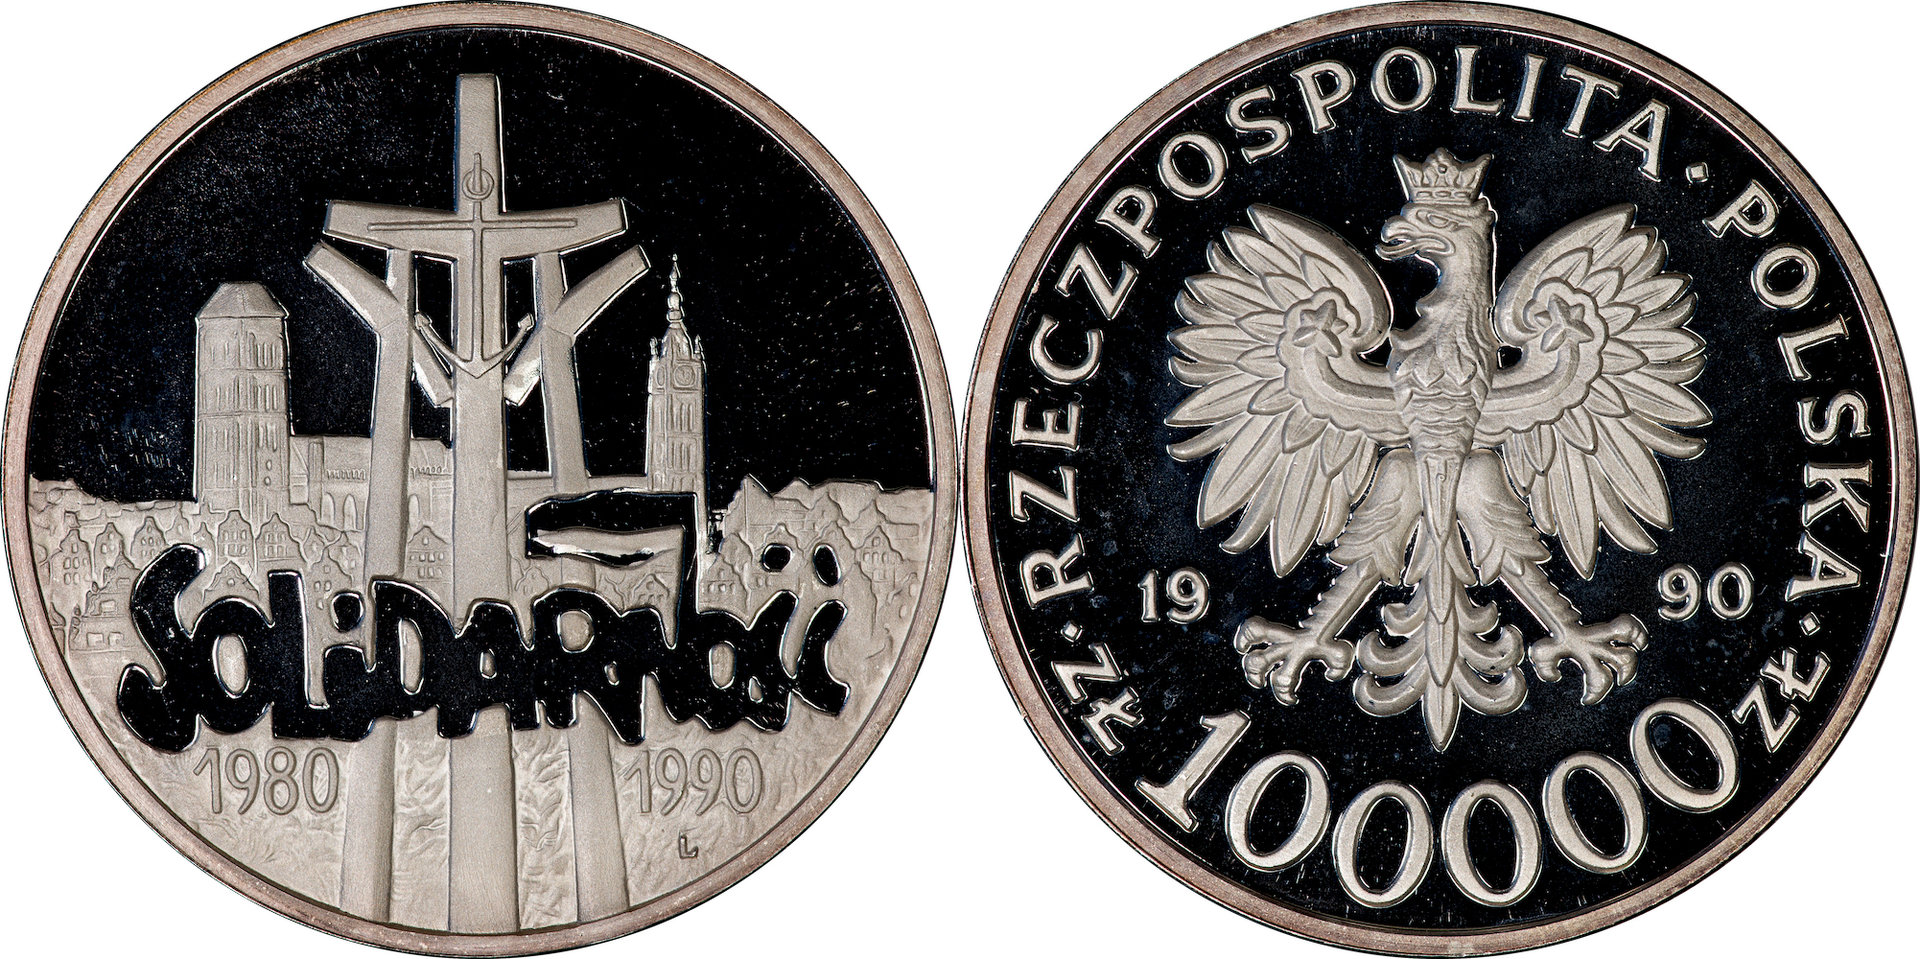 Poland - 1990 Proof 100000 Zlotych.jpg